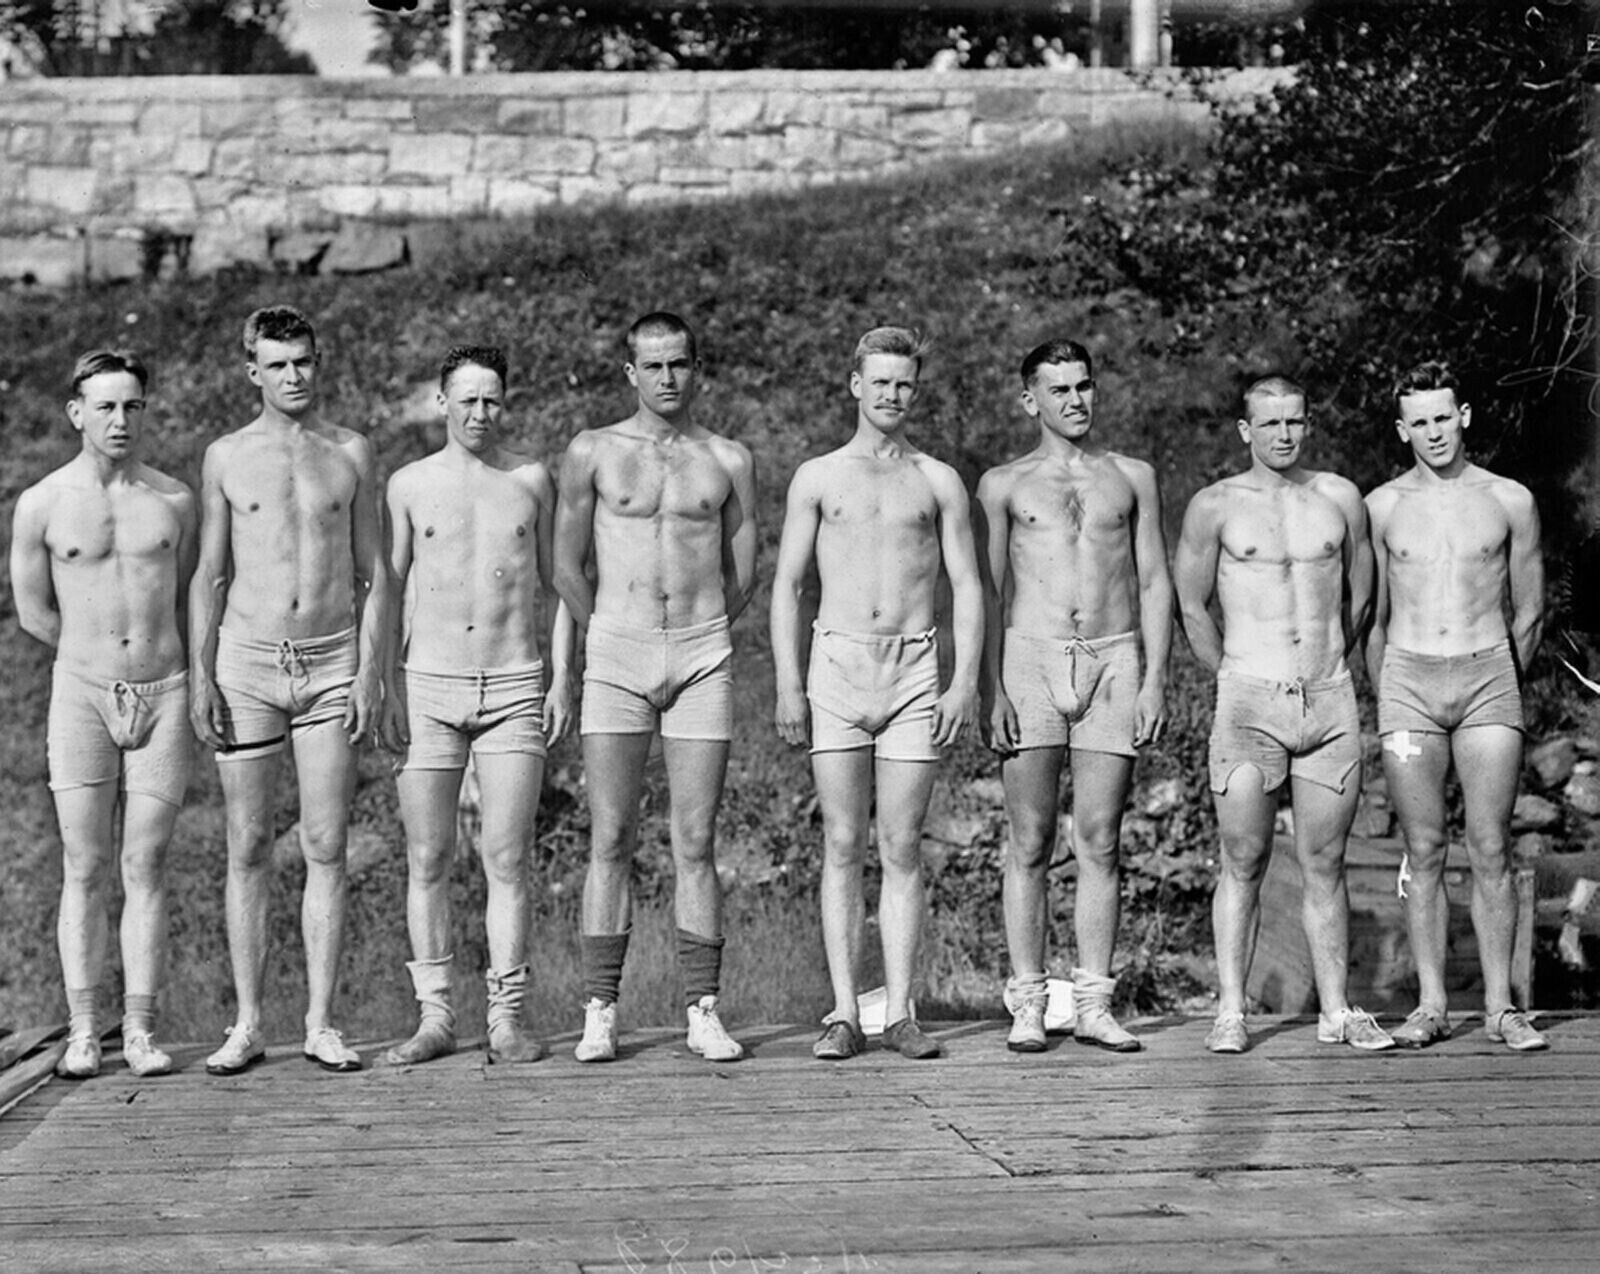 1911 YALE VARSITY ROWING TEAM Crew Classic Retro Vintage Picture Photo Print 5x7